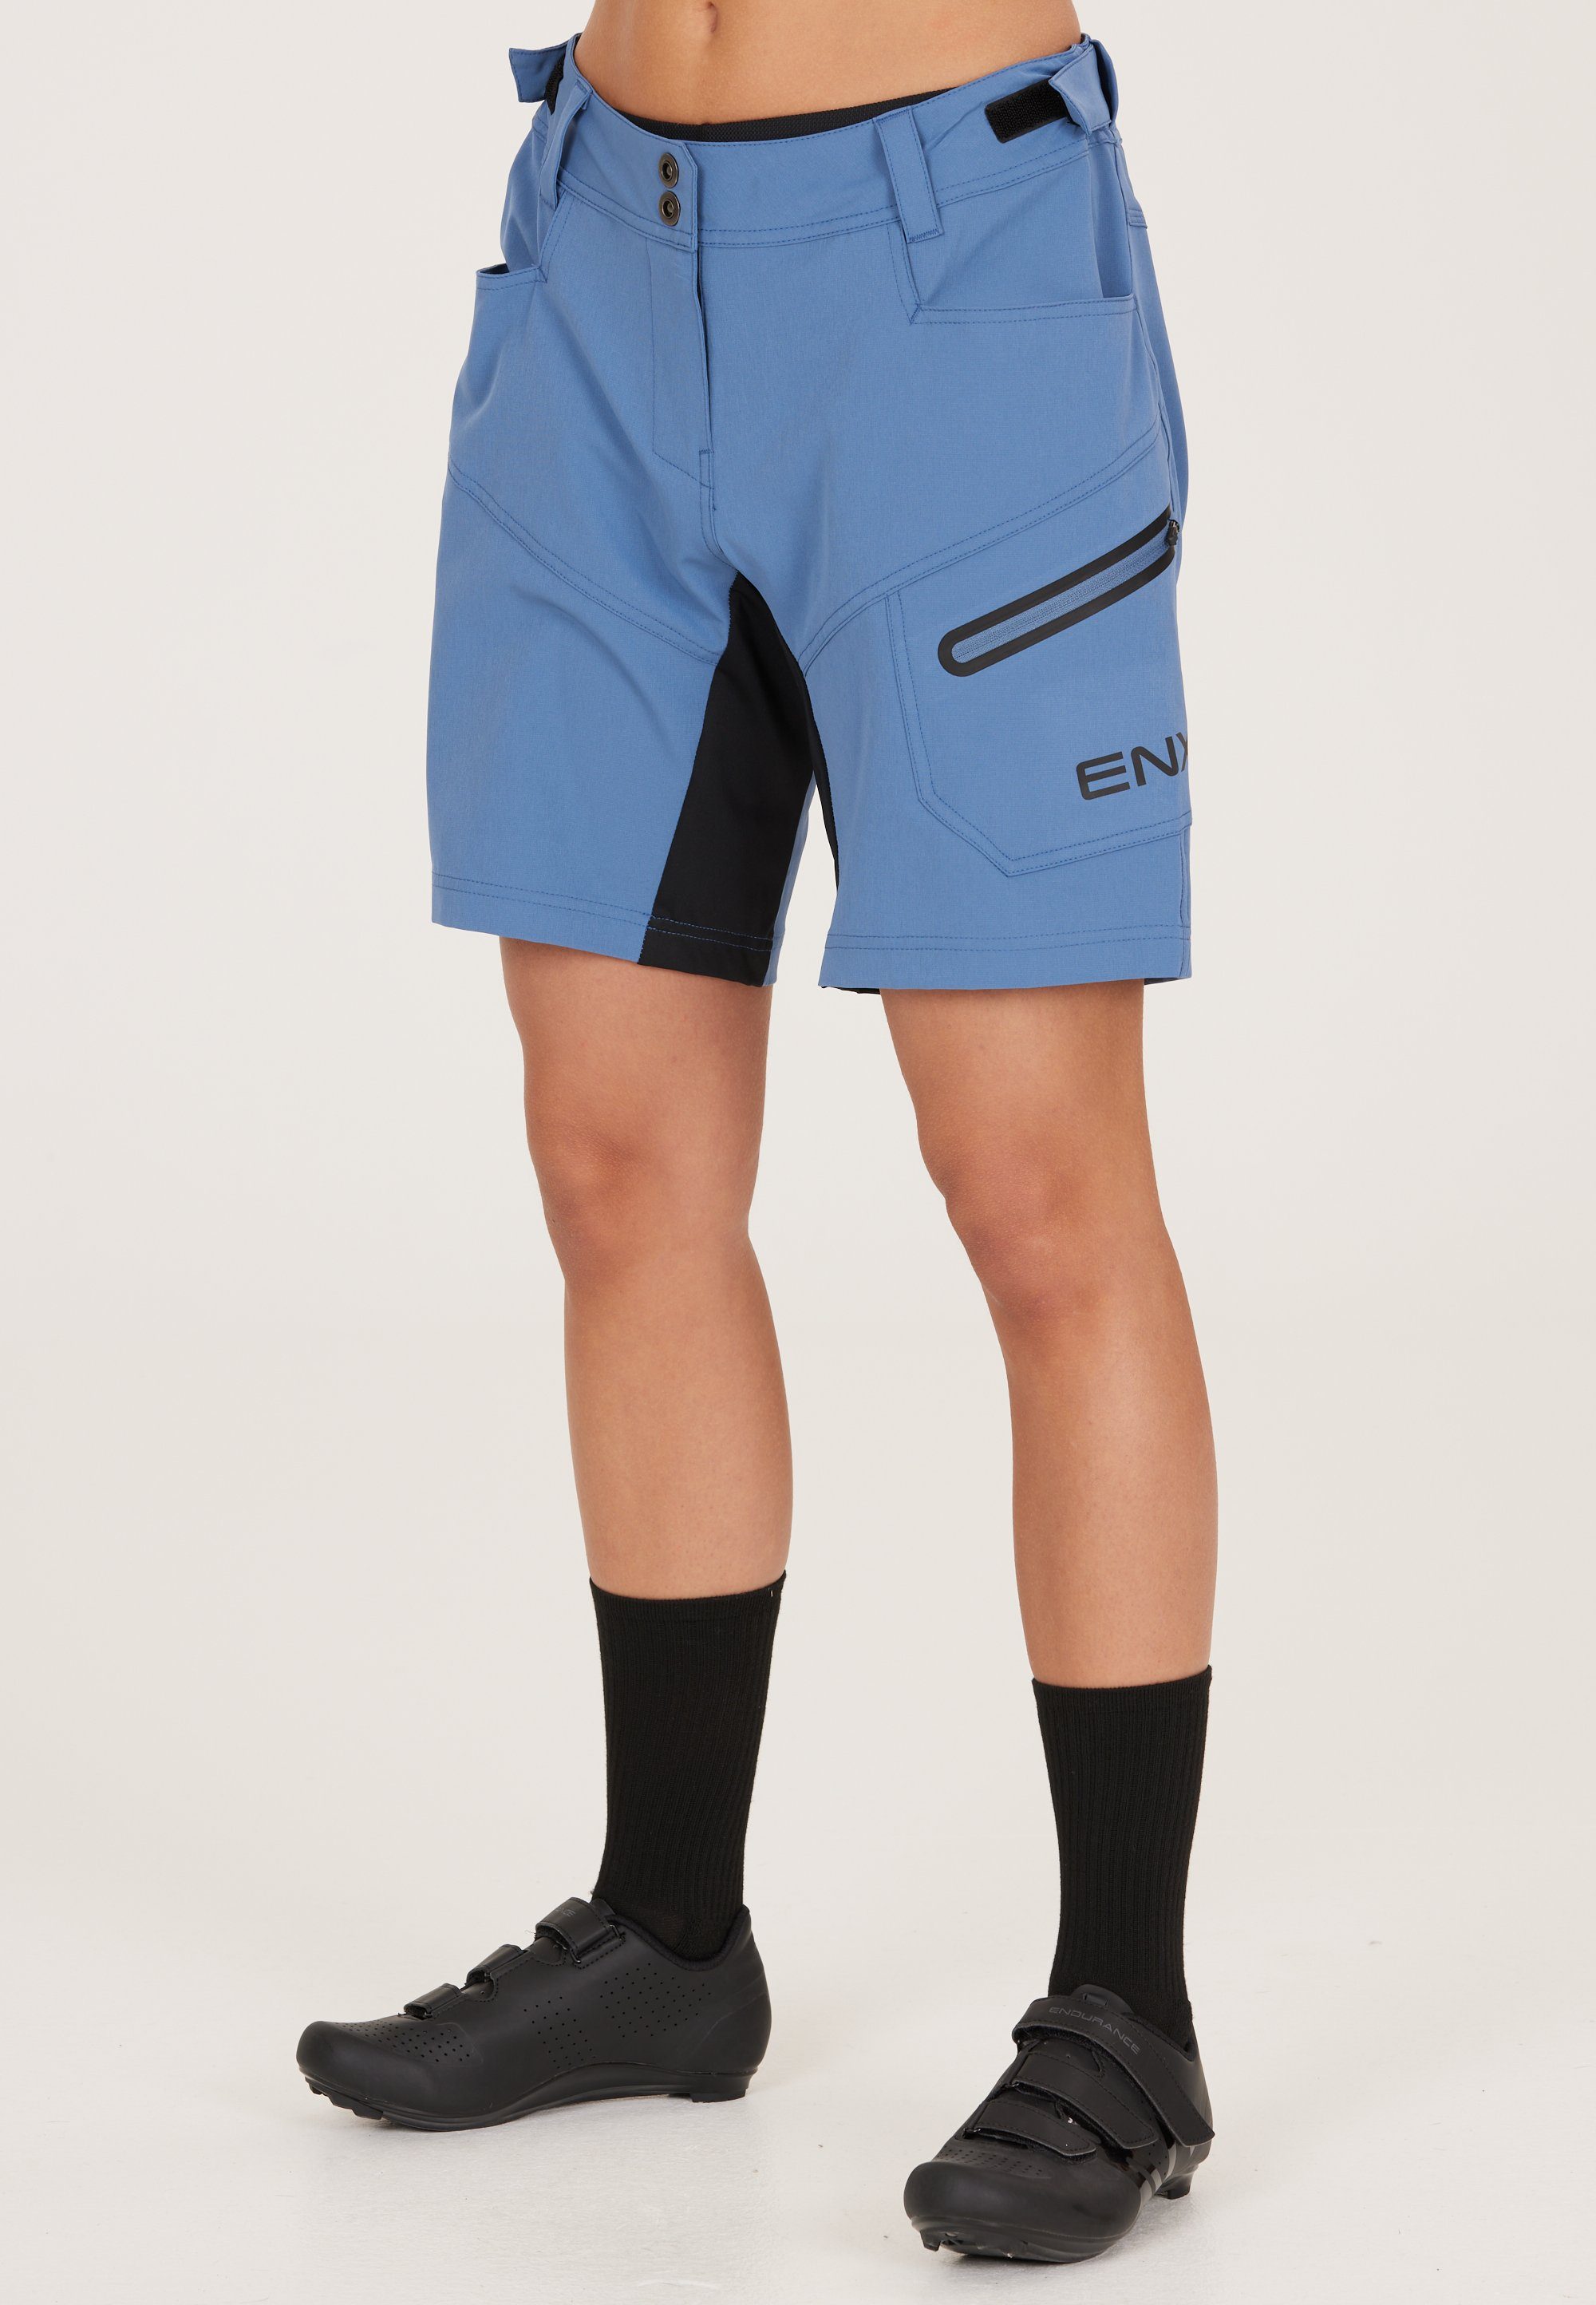 ENDURANCE Radhose Jamilla W 2 in 1 Shorts mit herausnehmbarer Innen-Tights blau